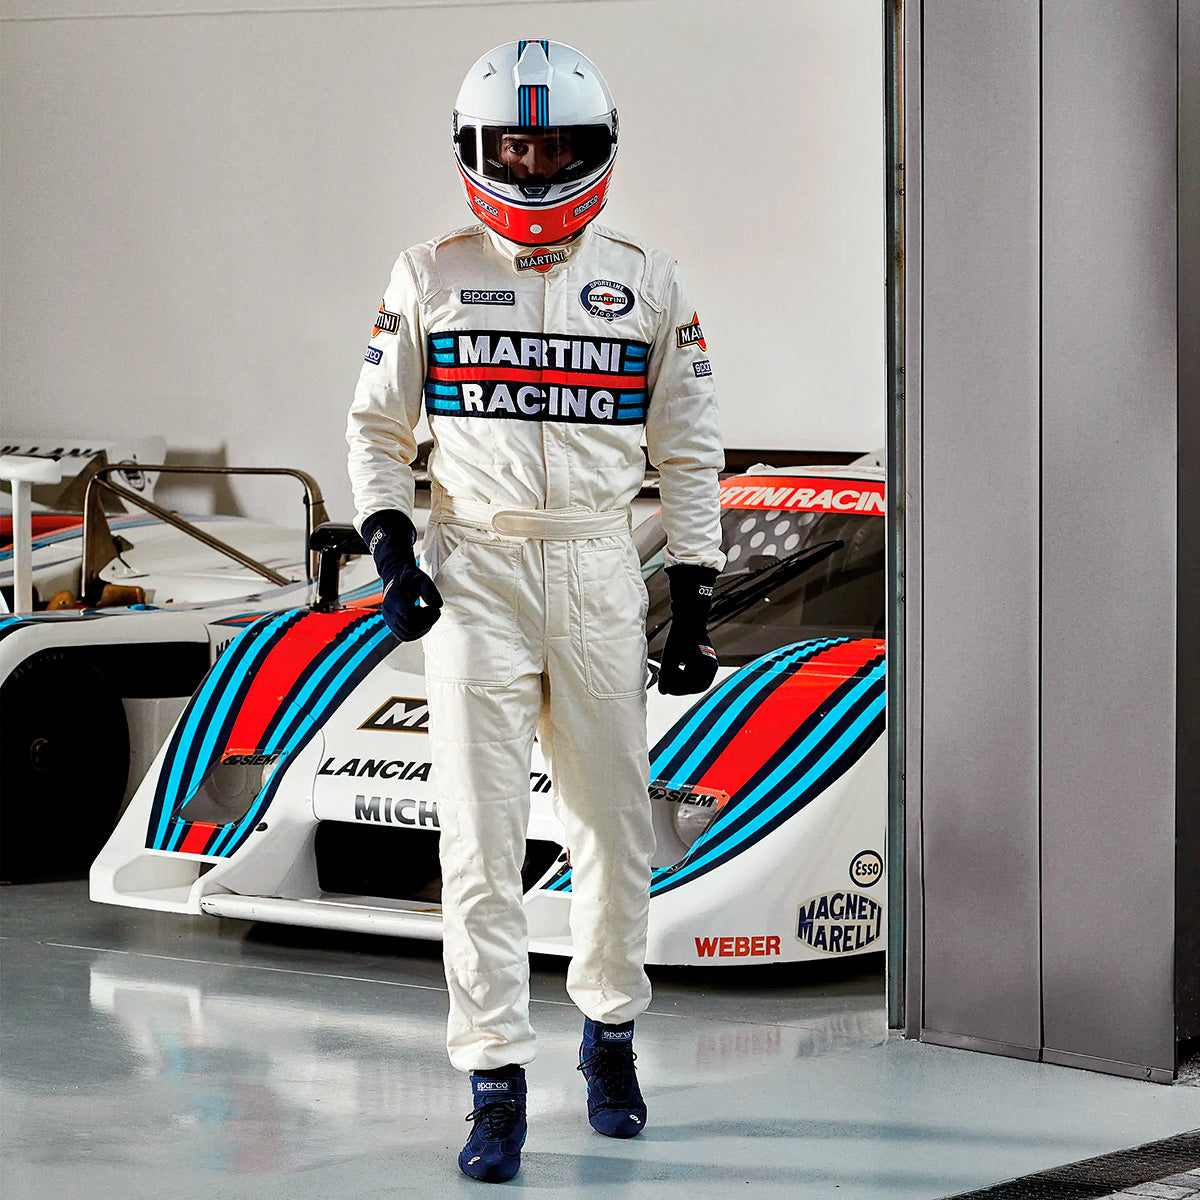 Sparco Martini Racing Replica Driver Suit